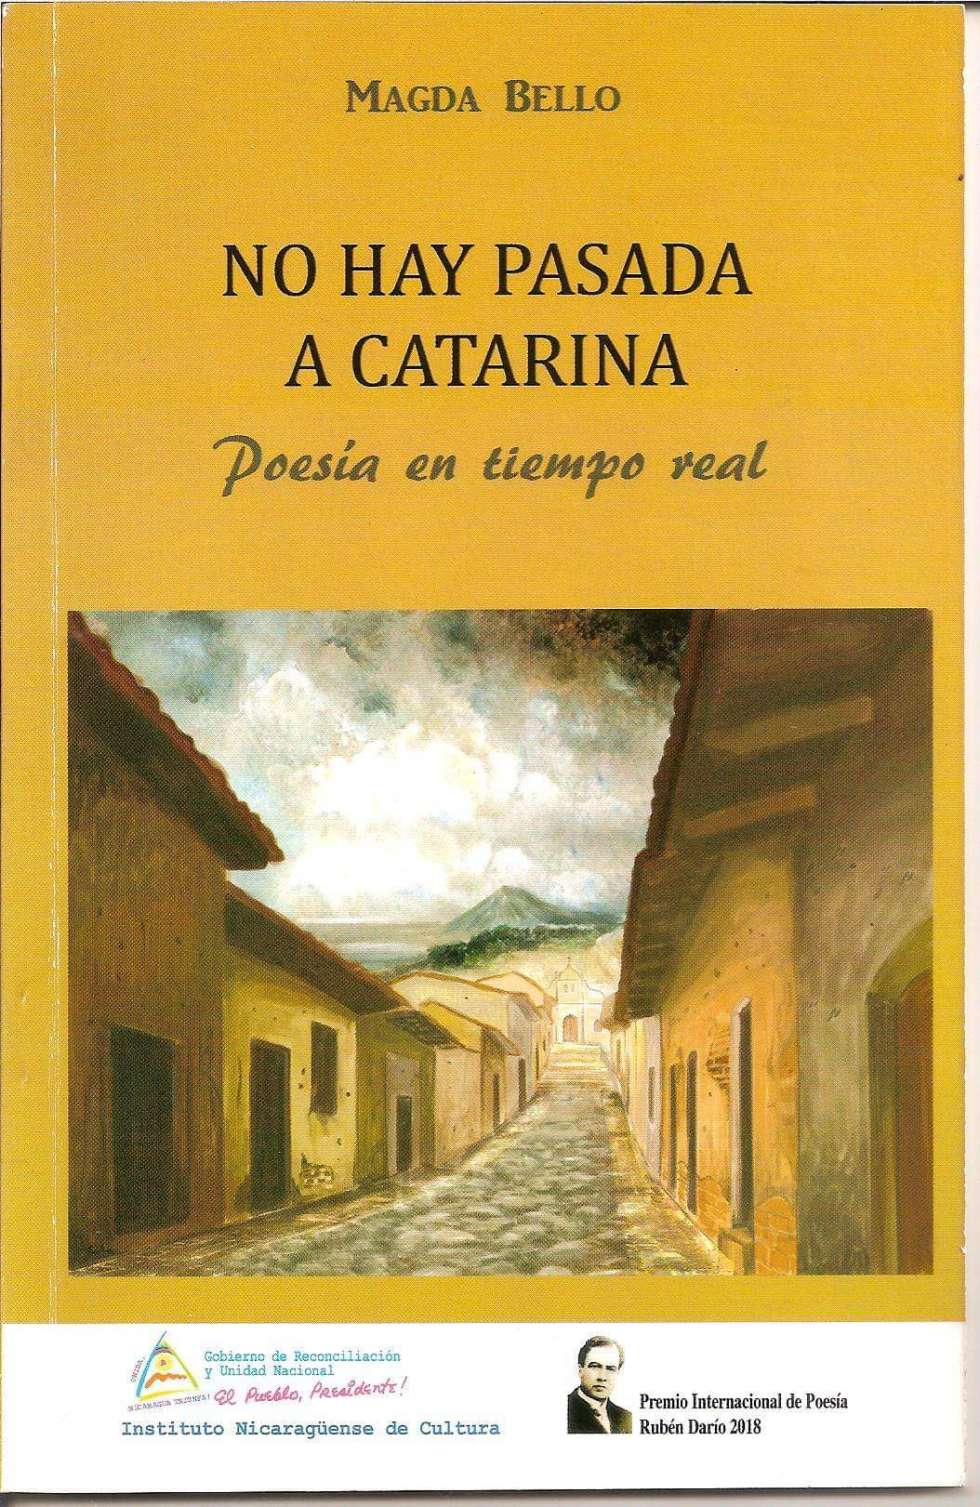 Libro ganador NO HAY PASADA A CATARINA 